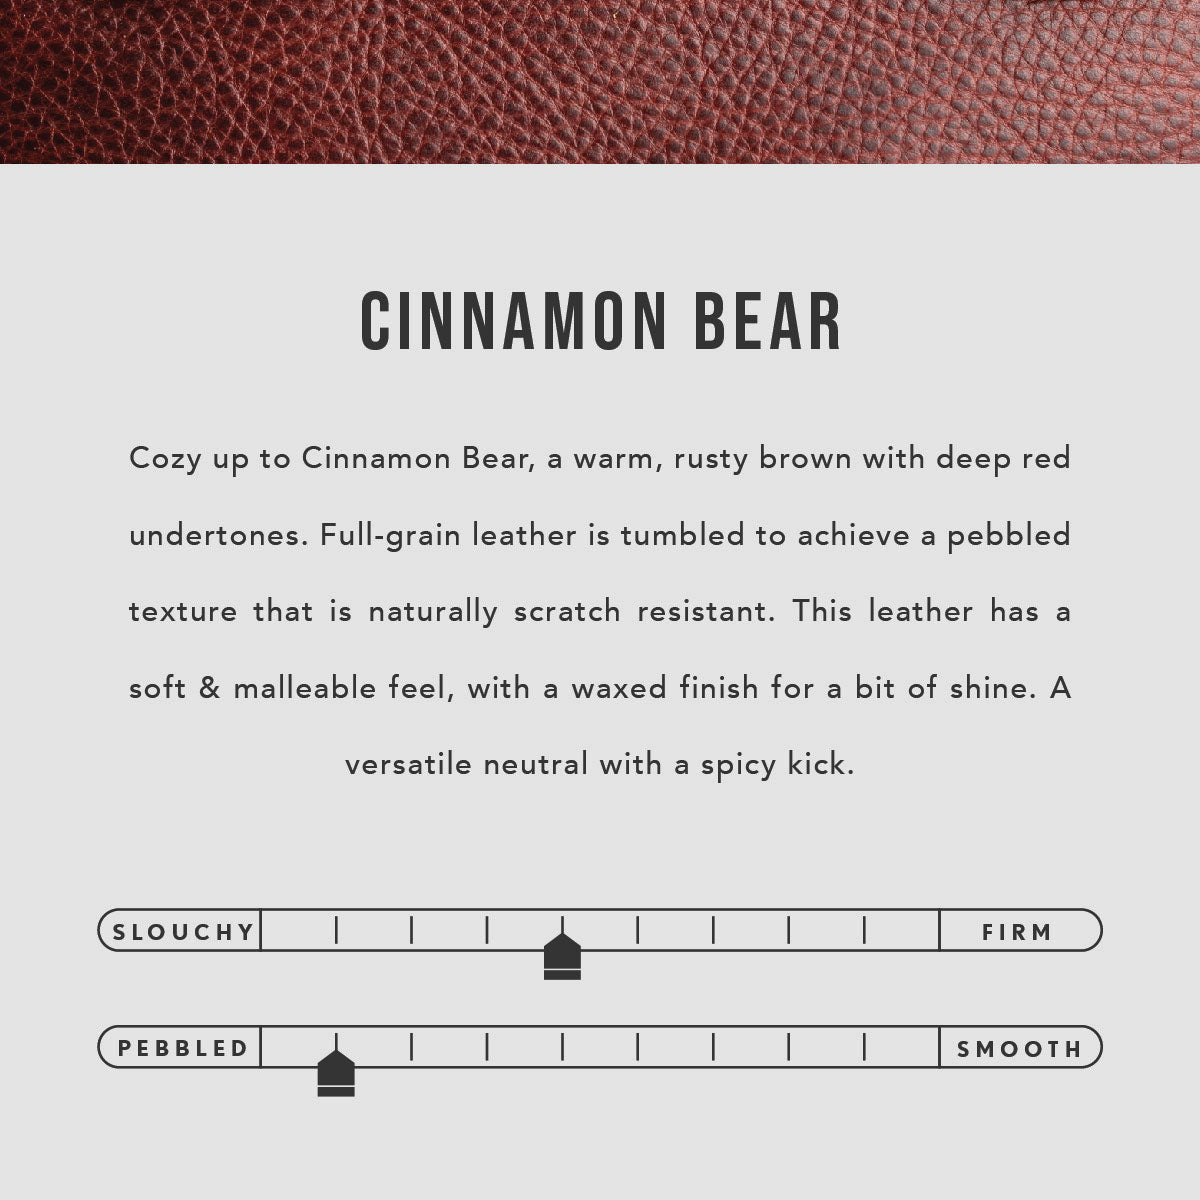 Cinnamon Bear | infographic